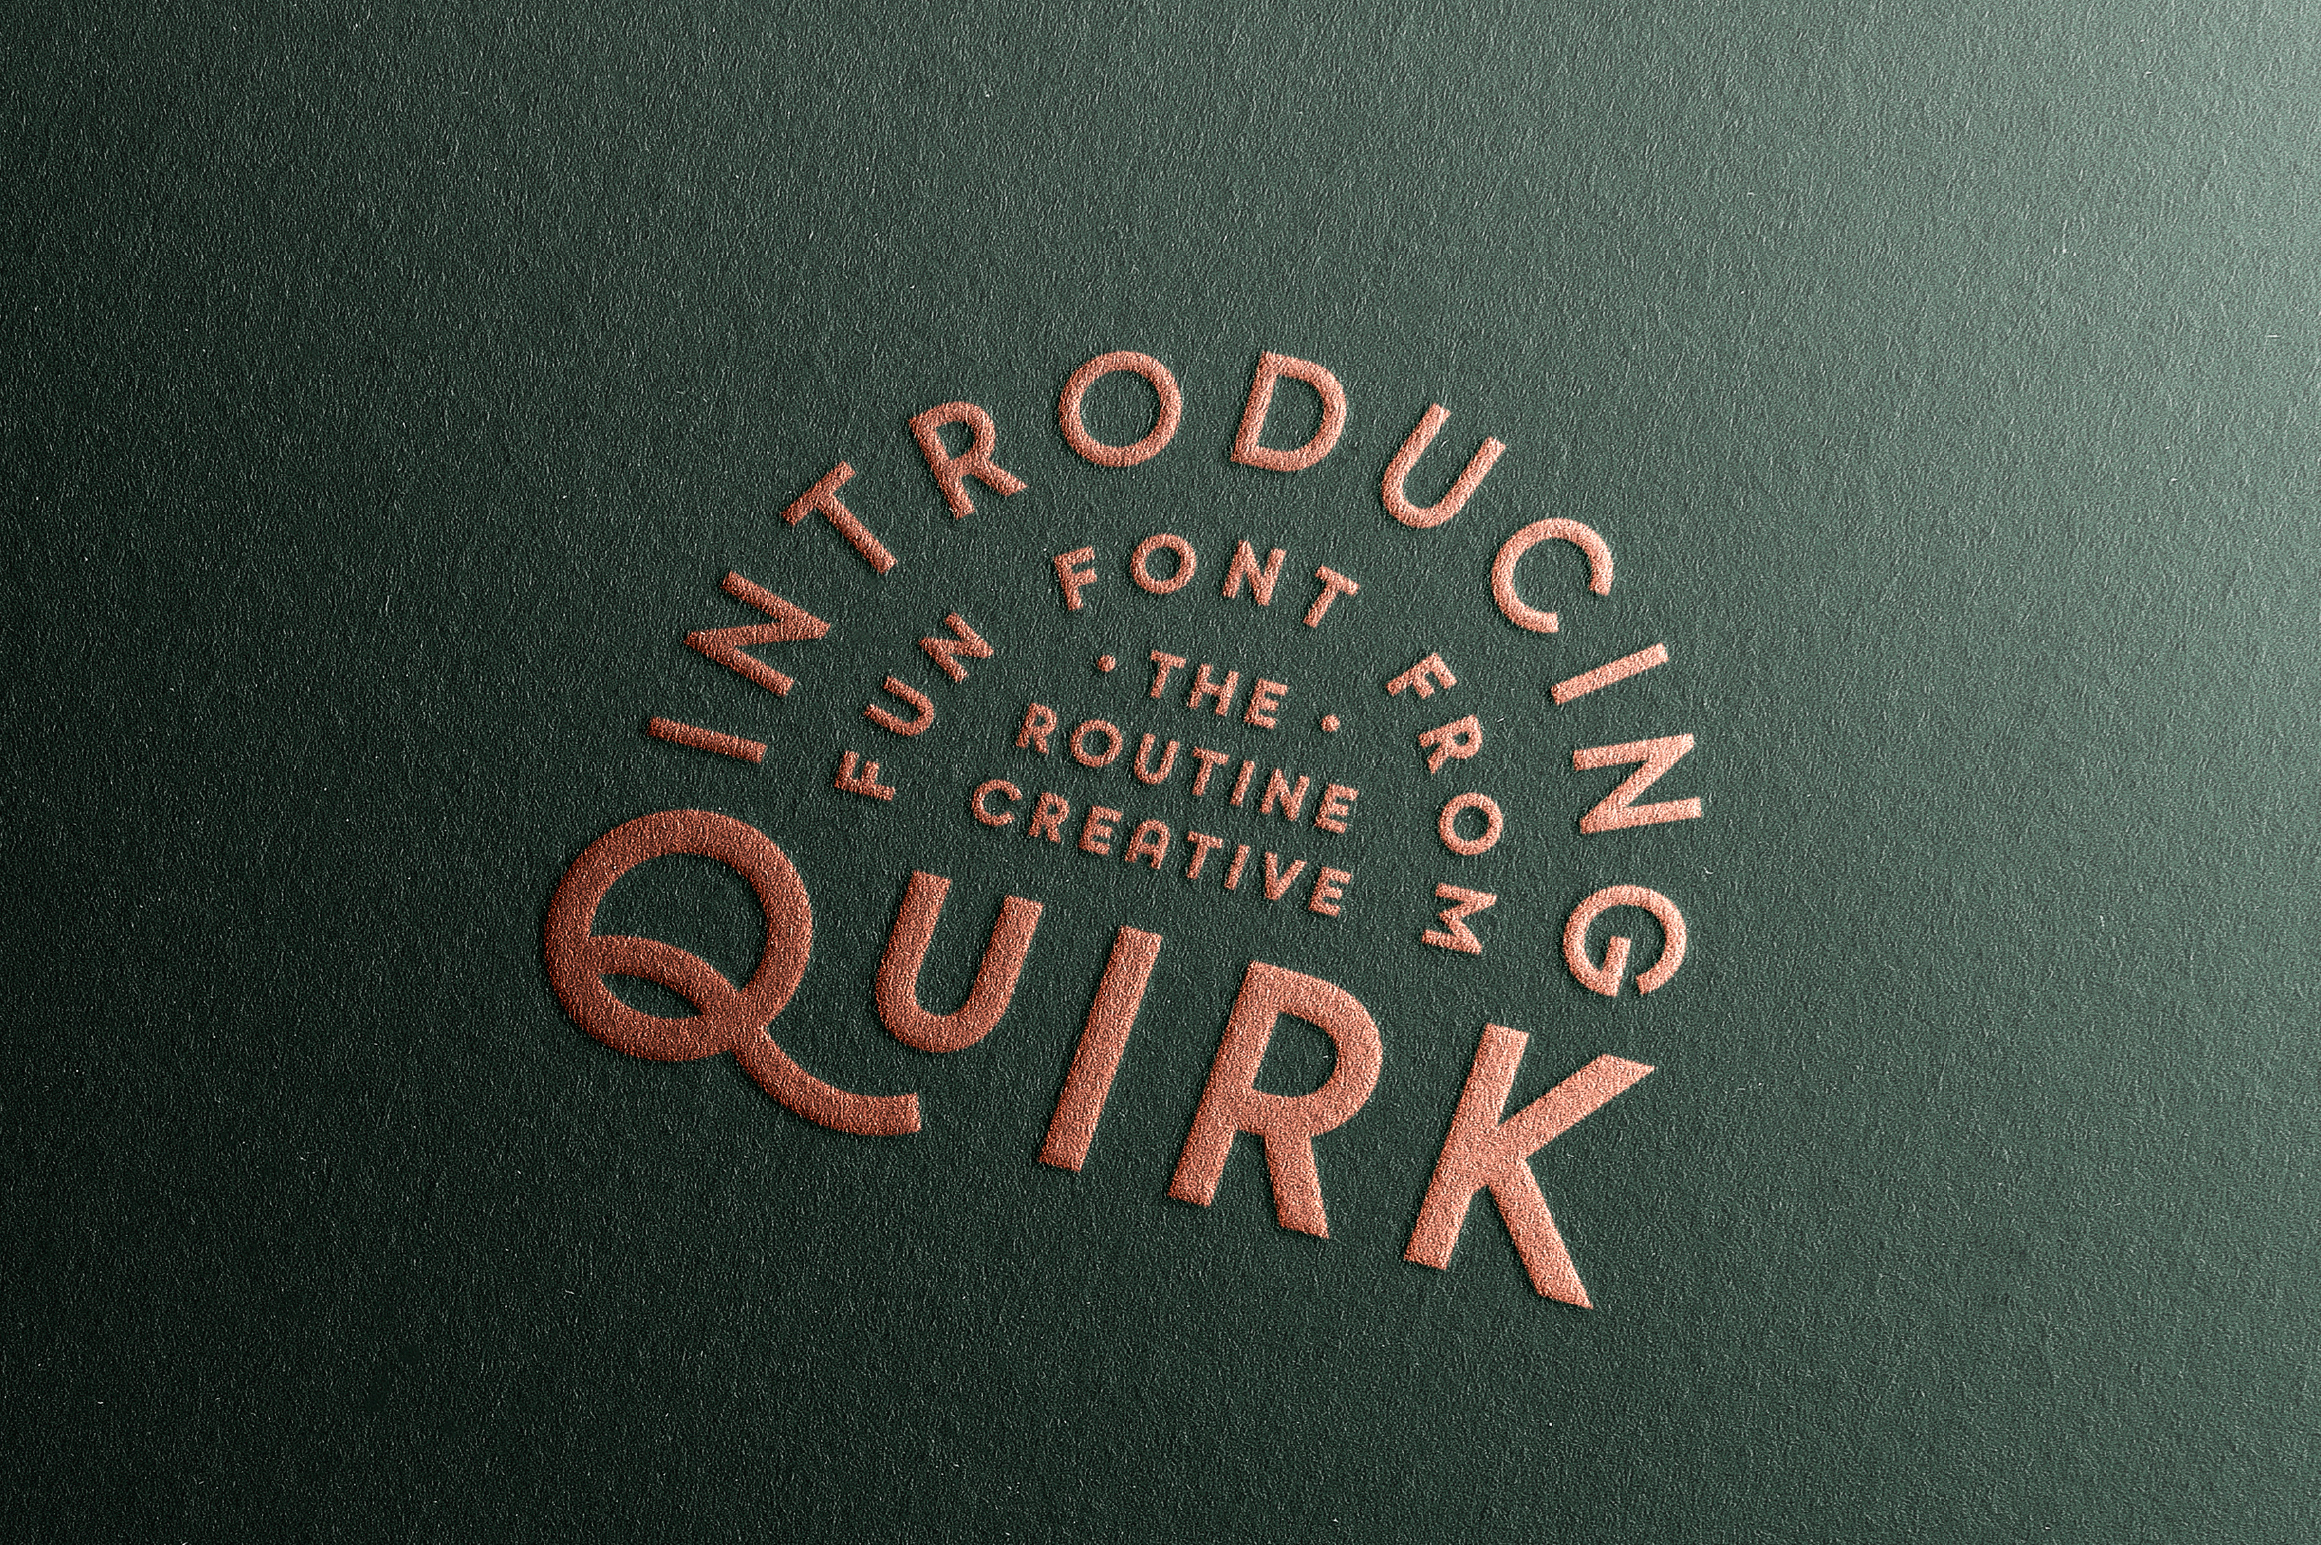 Quirk - Fun Display Font